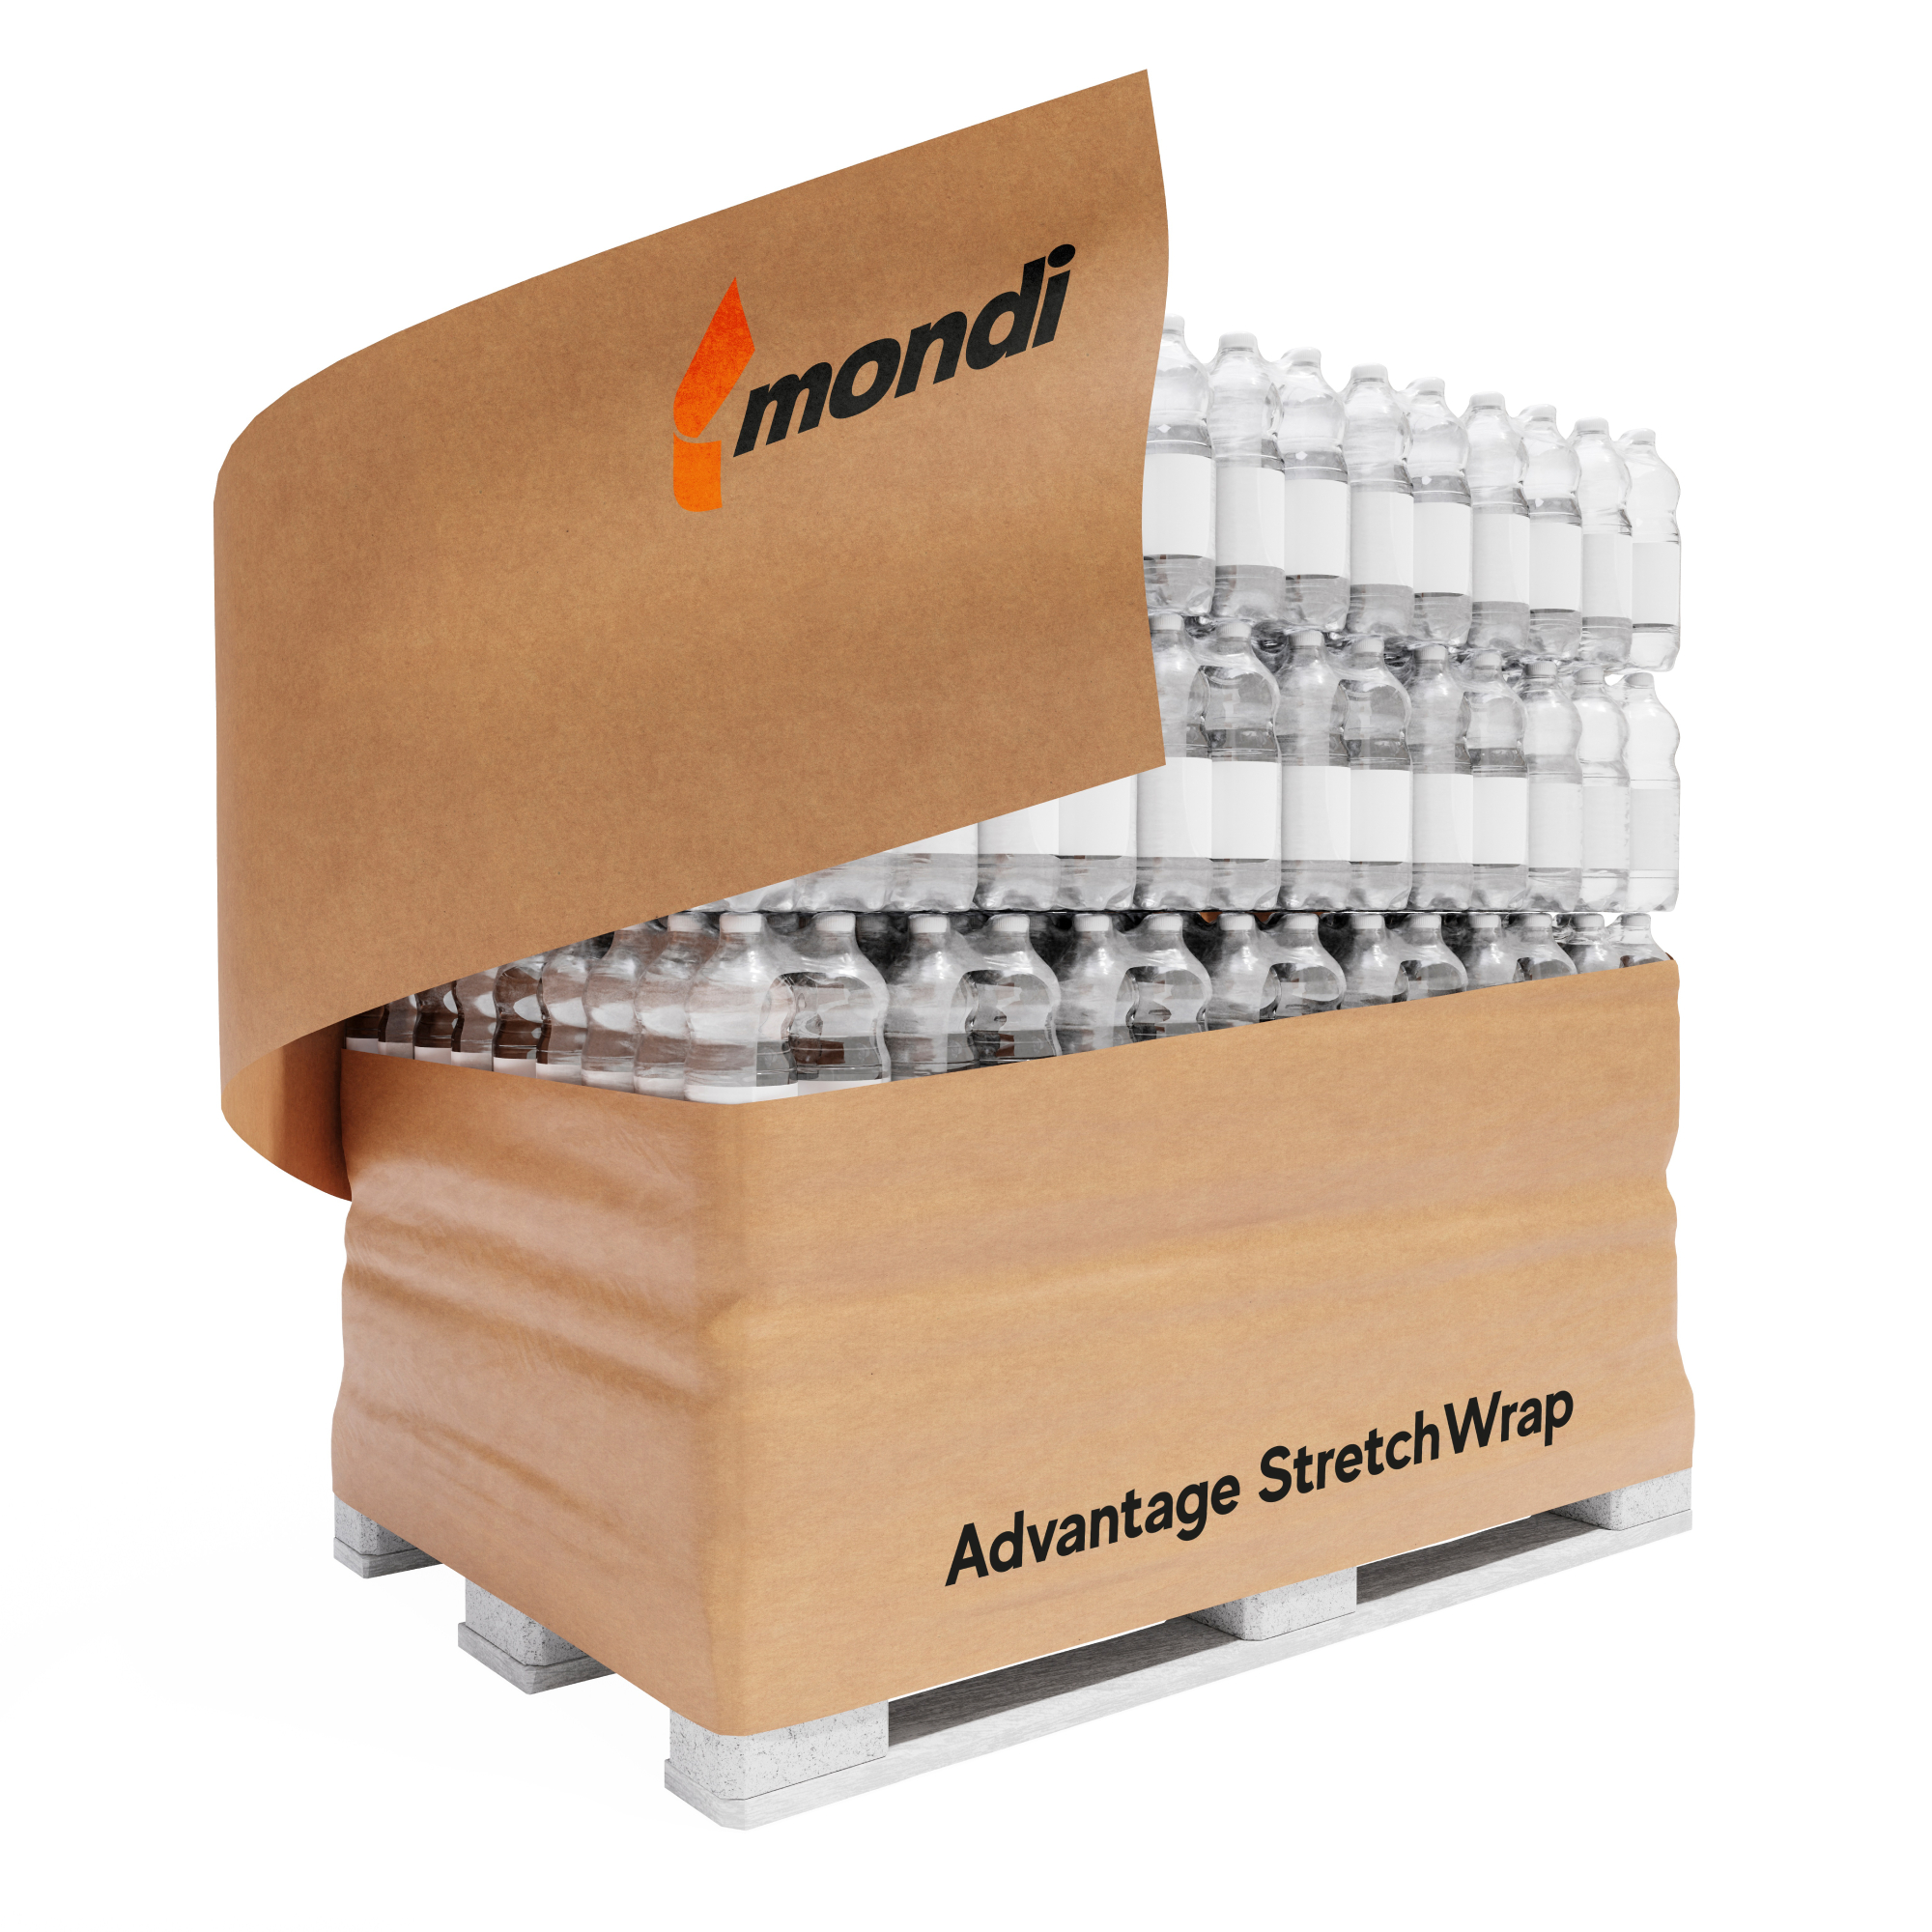 Бумага Advantage StretchWrap от Mondi удостоена награды Fastmarkets PPI Product Innovation Award